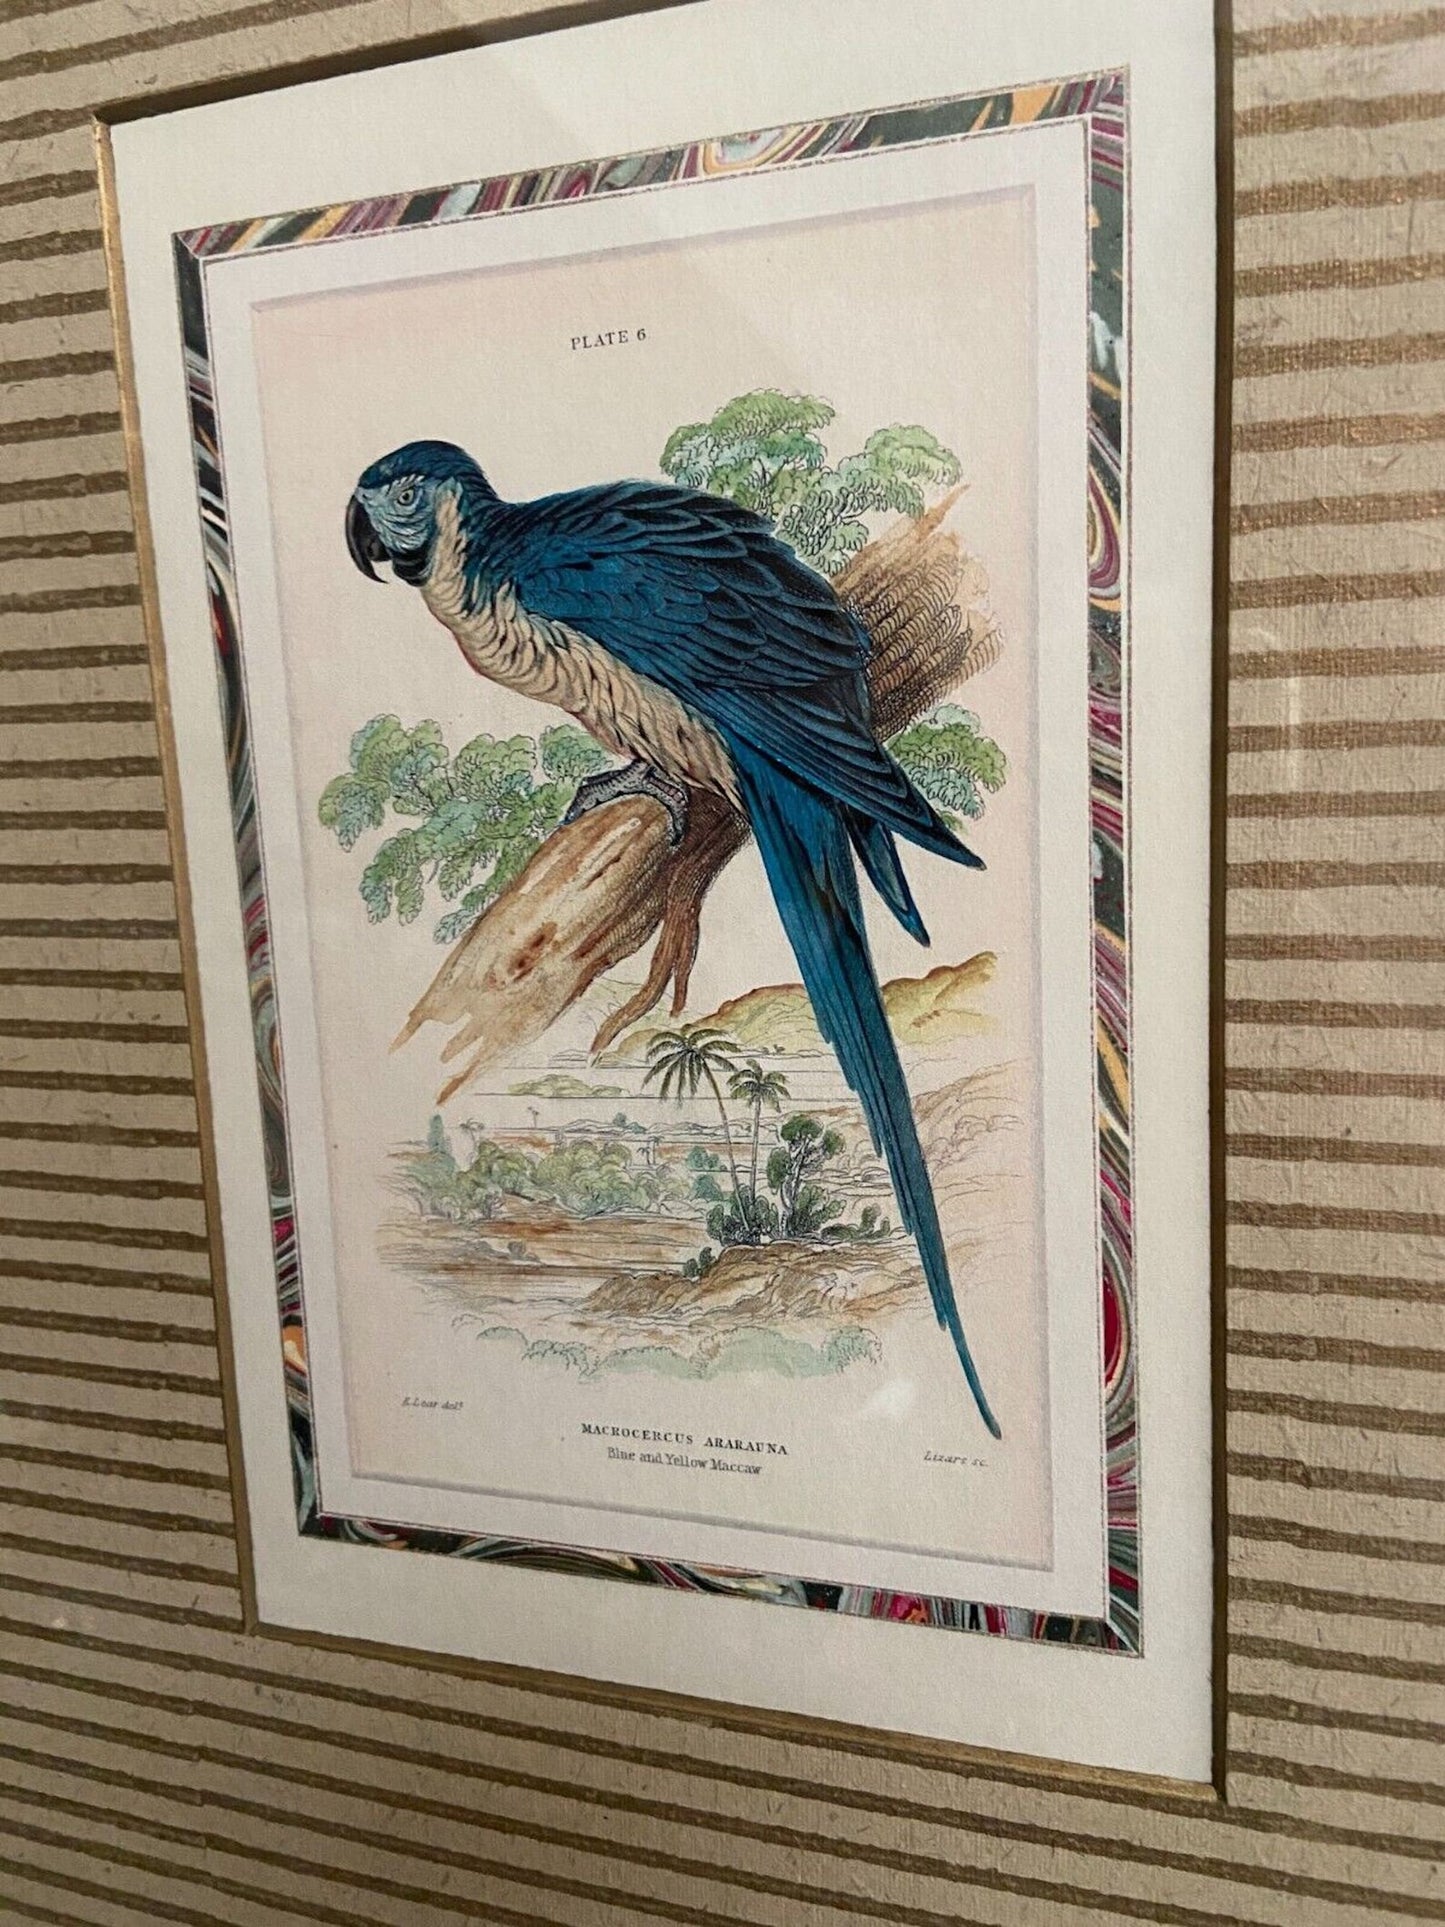 Pair Vintage Gilt Framed Jardine Parrot Bird Prints, 21.75ʺW × 2ʺD × 25.5ʺH - Excellent!